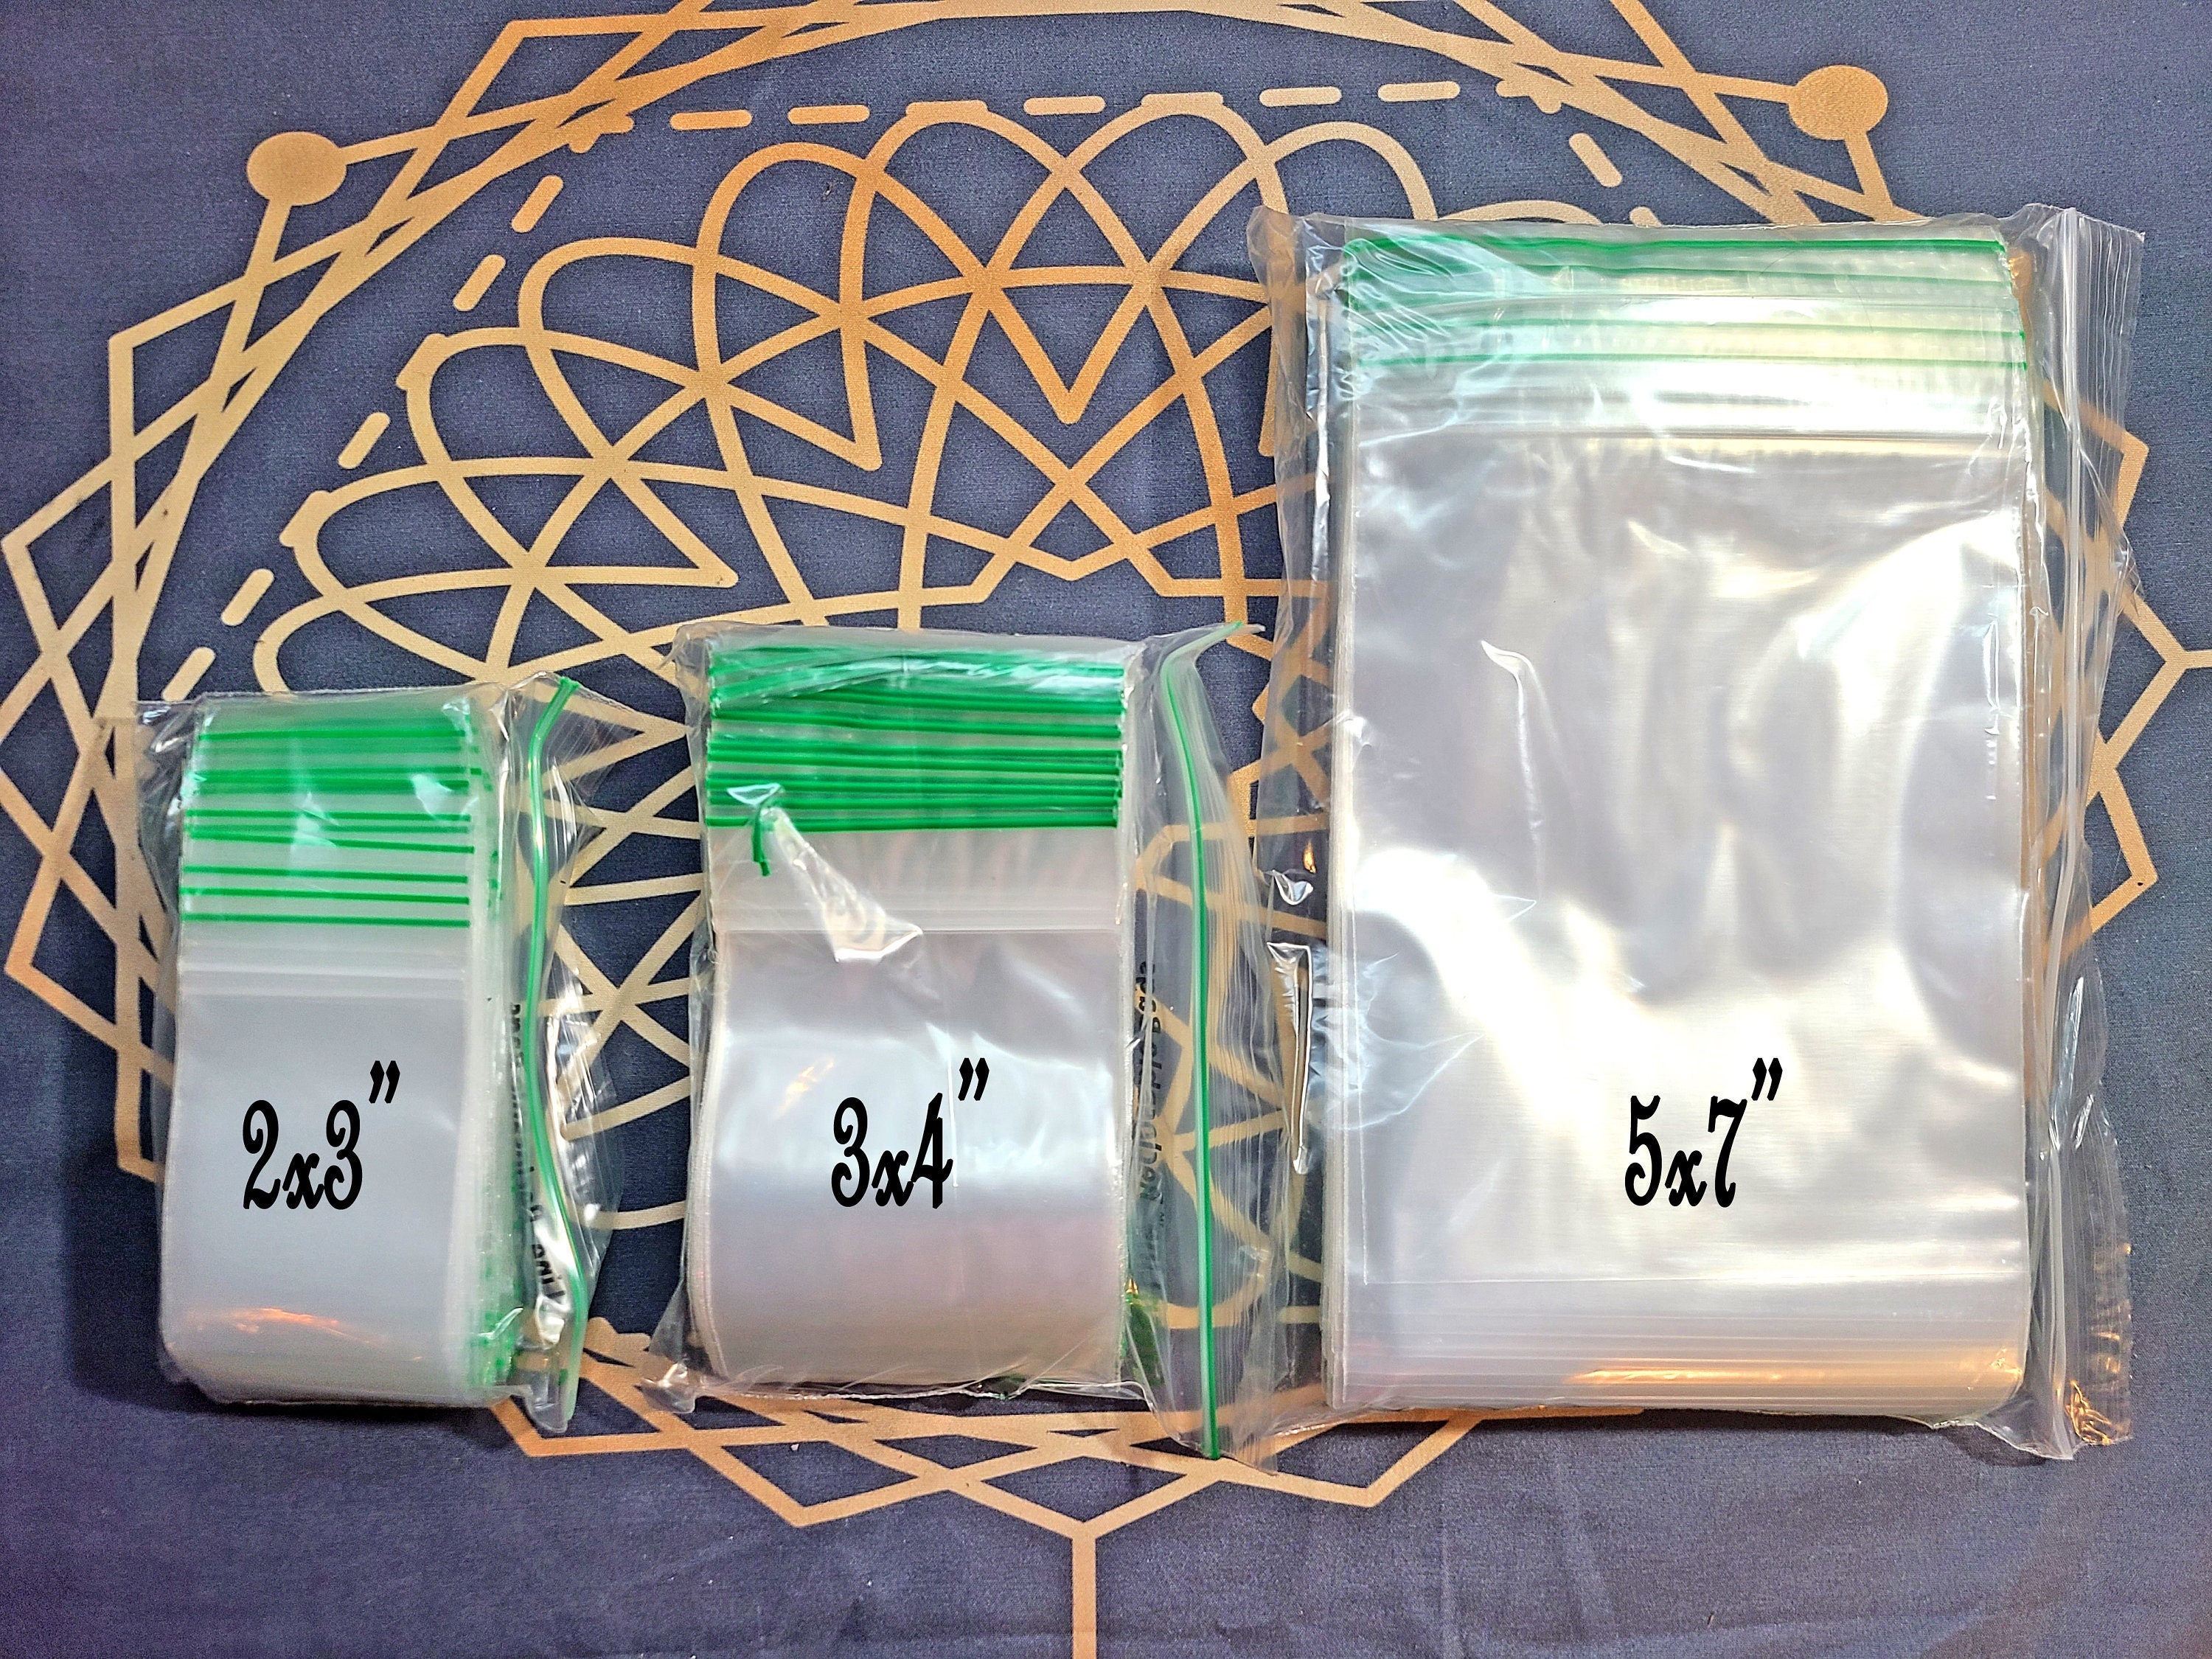 2 x 3 2 Mil Minigrip Greenline Biodegradable Reclosable Bags